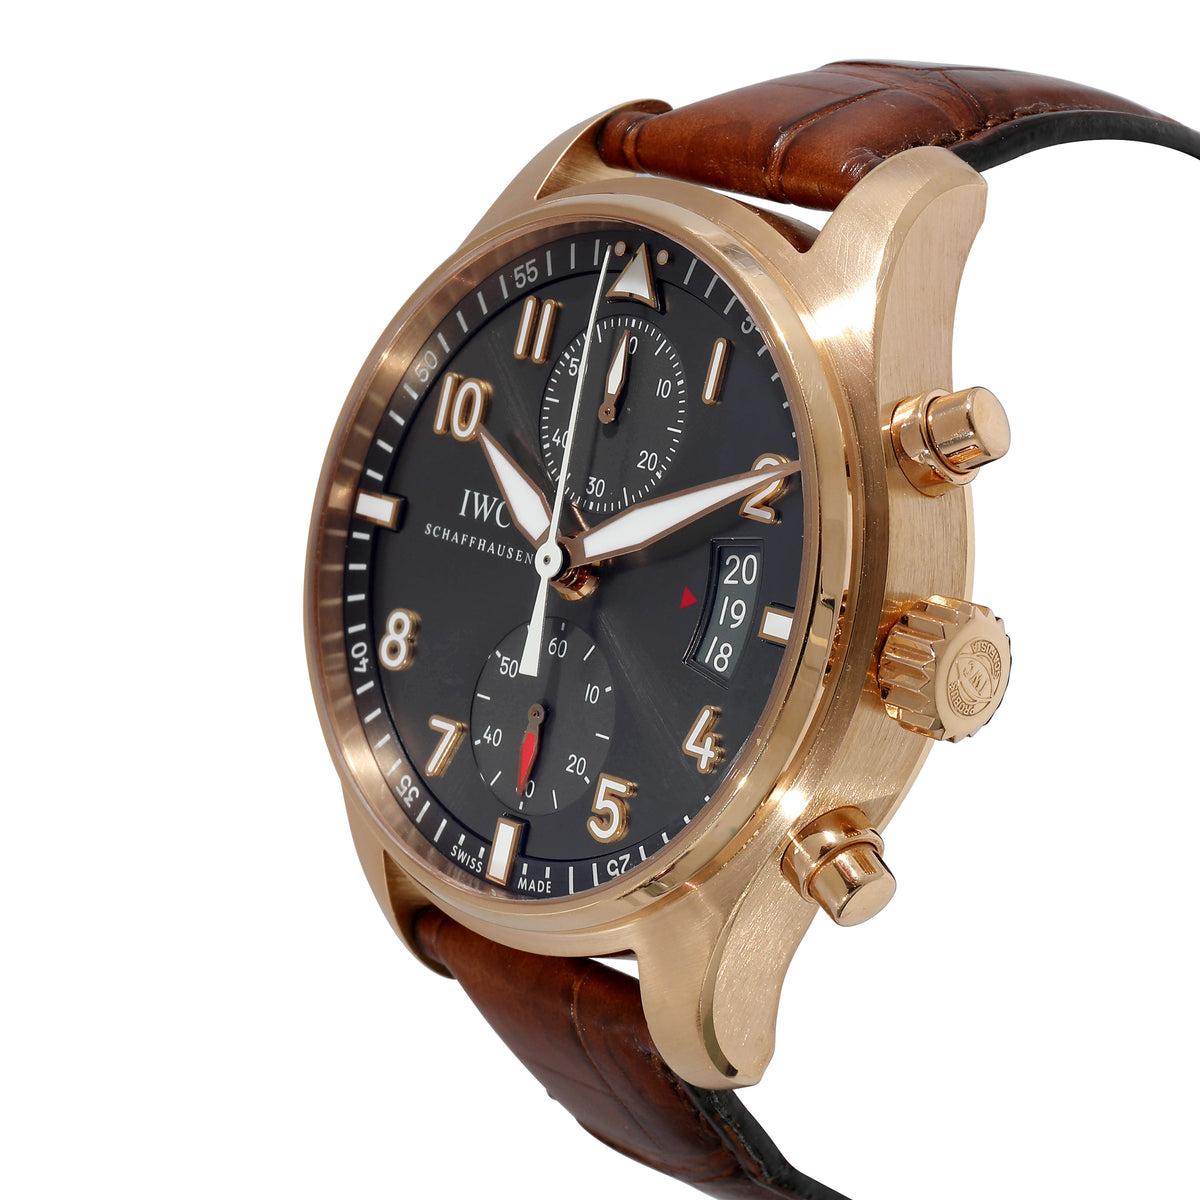 Pilot Spitfire IW387803 Men's Watch in 18kt Rose Gold